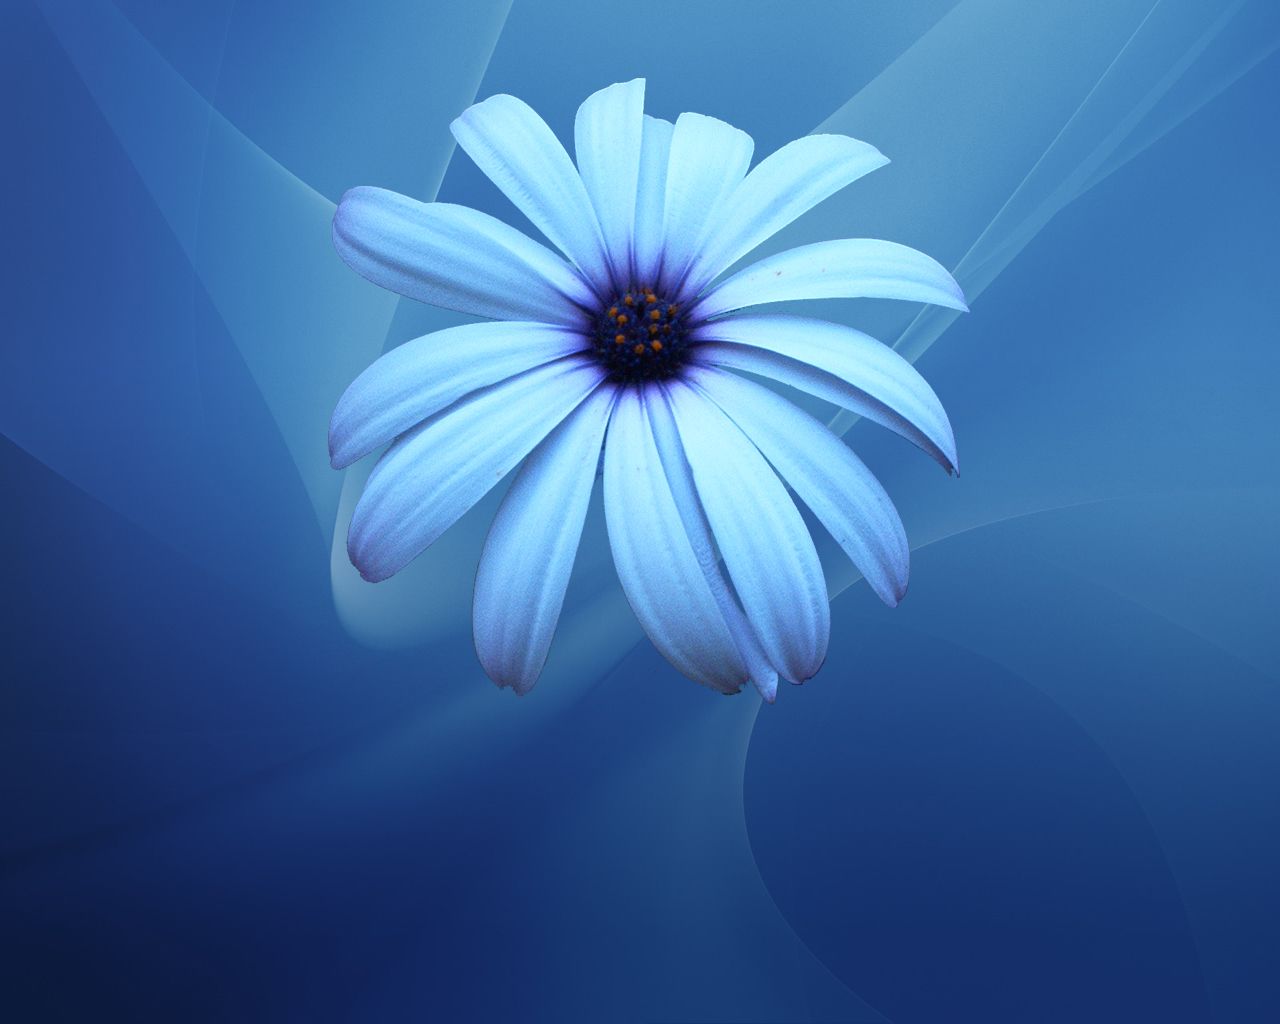 Wallpaper blue flower dark amoled desktop wallpaper hd image picture  background 476b3b  wallpapersmug